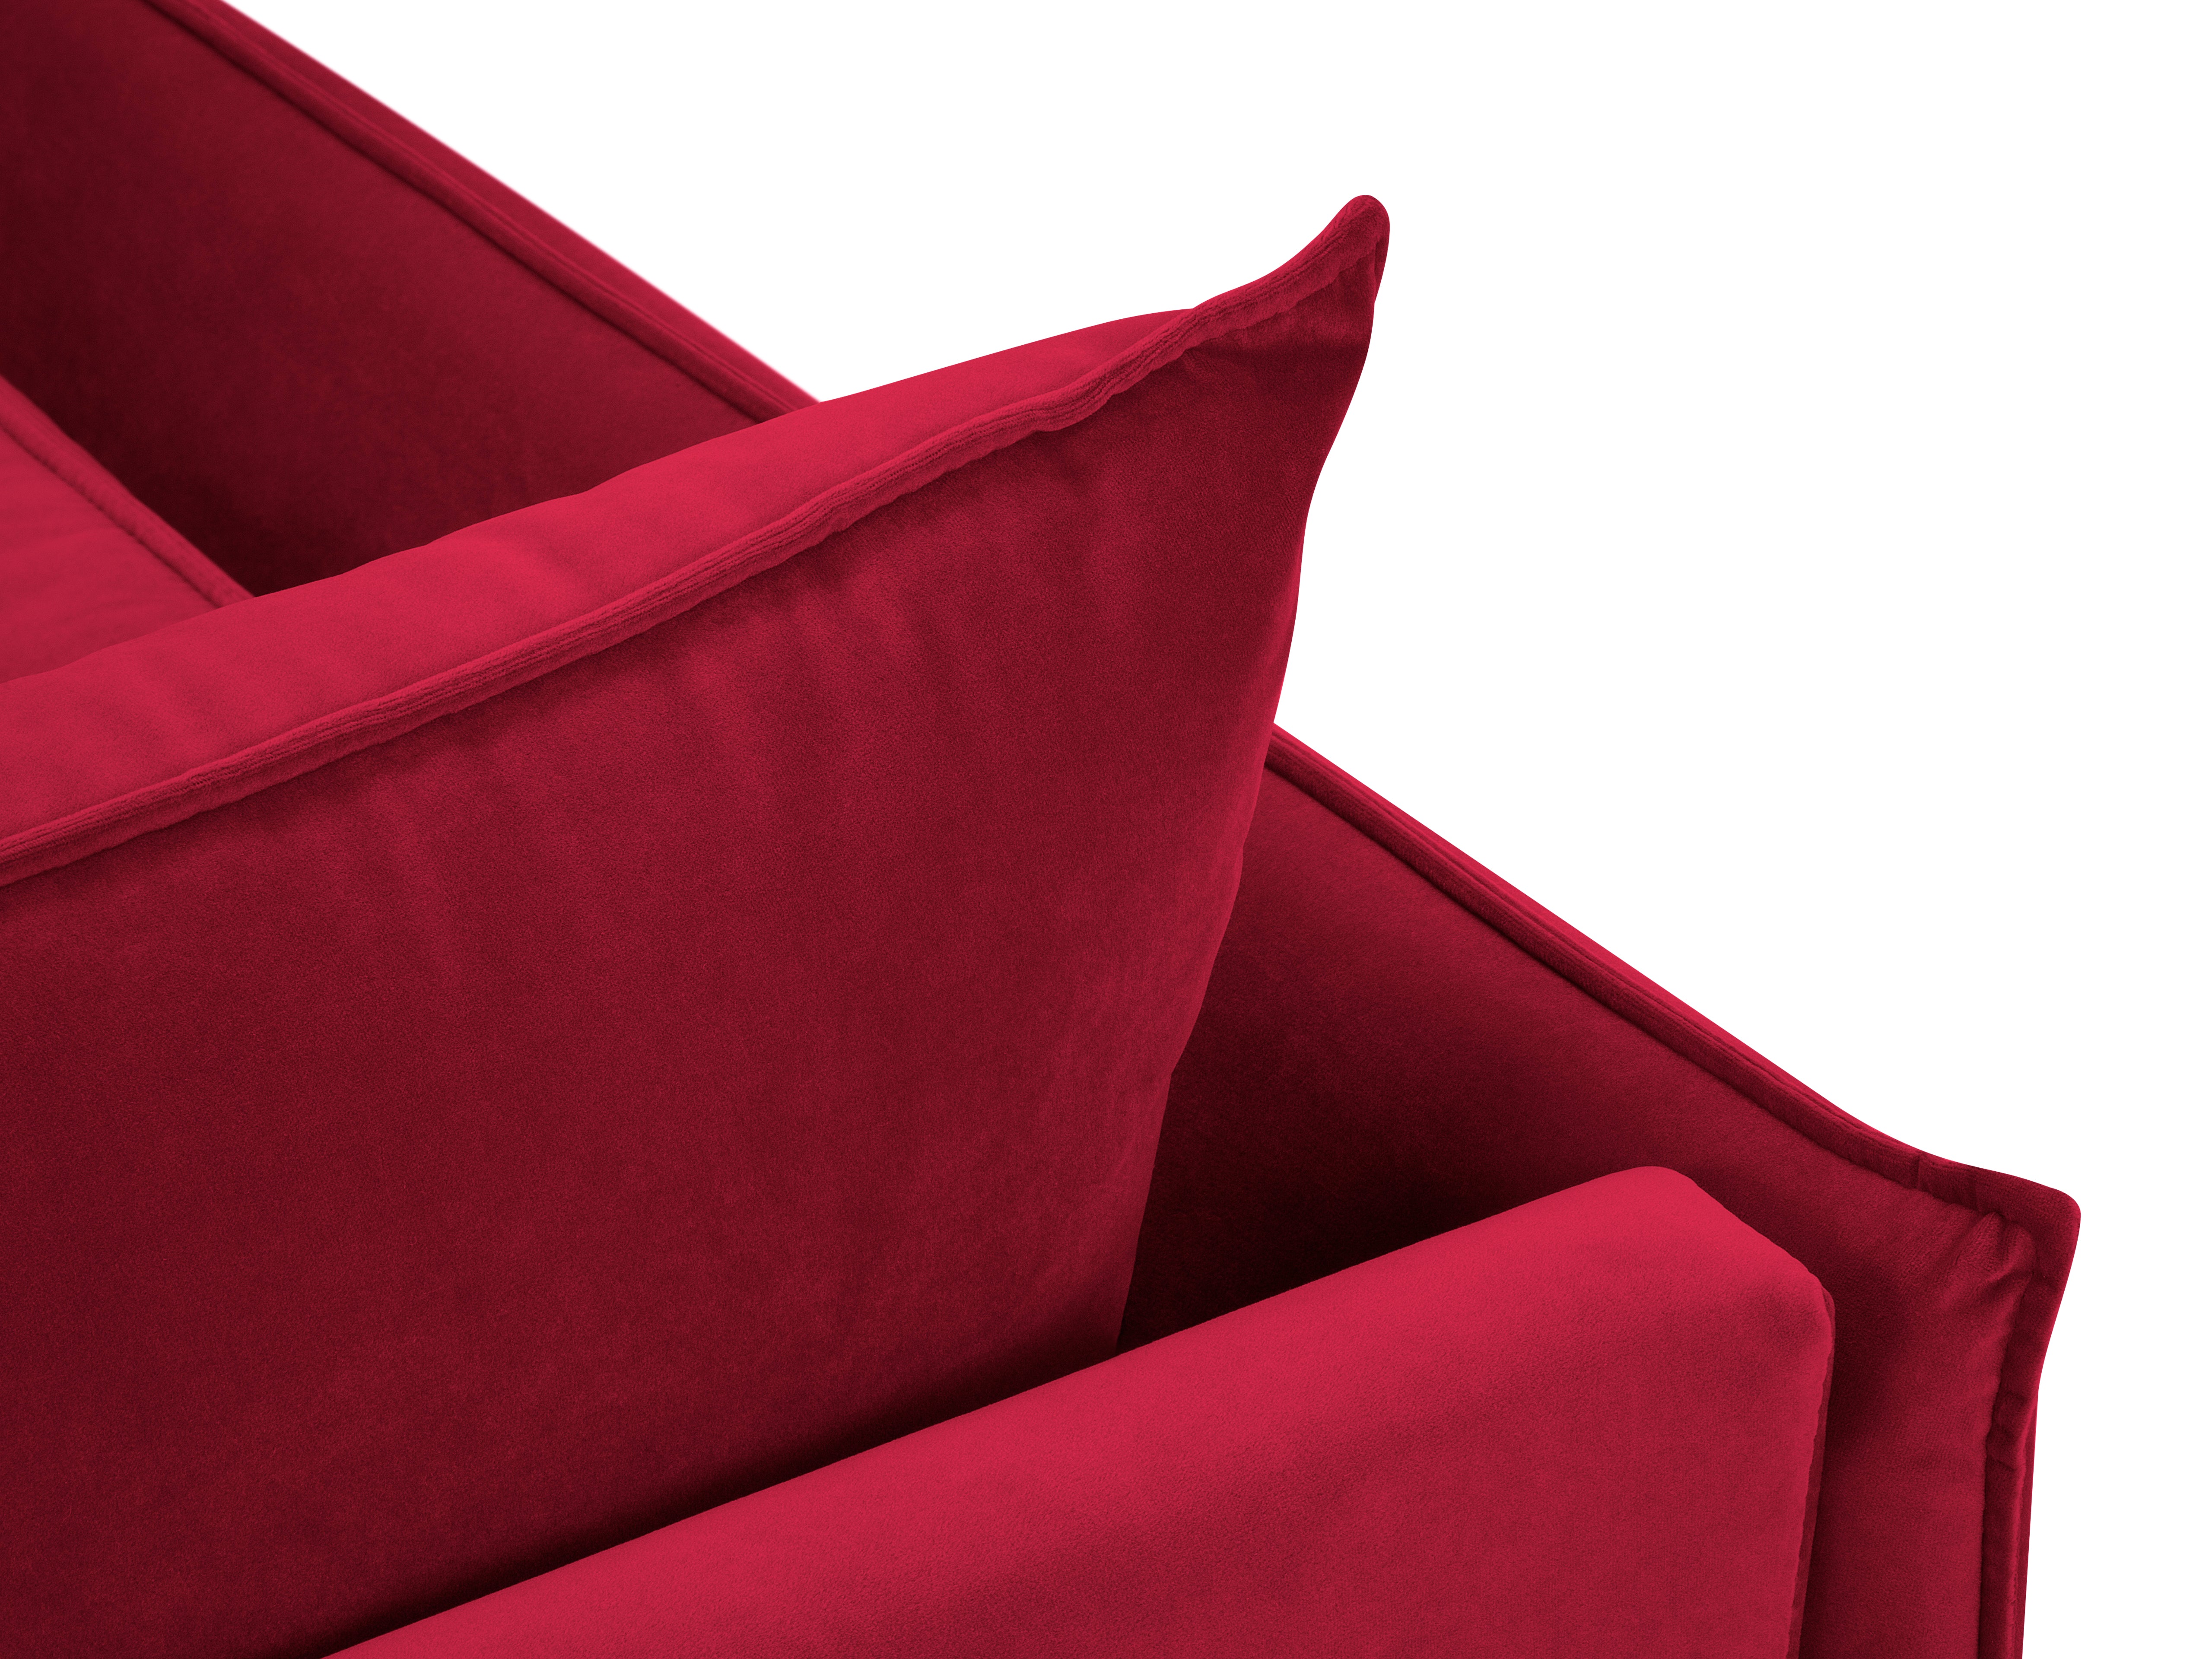 Sofa Agate crvena